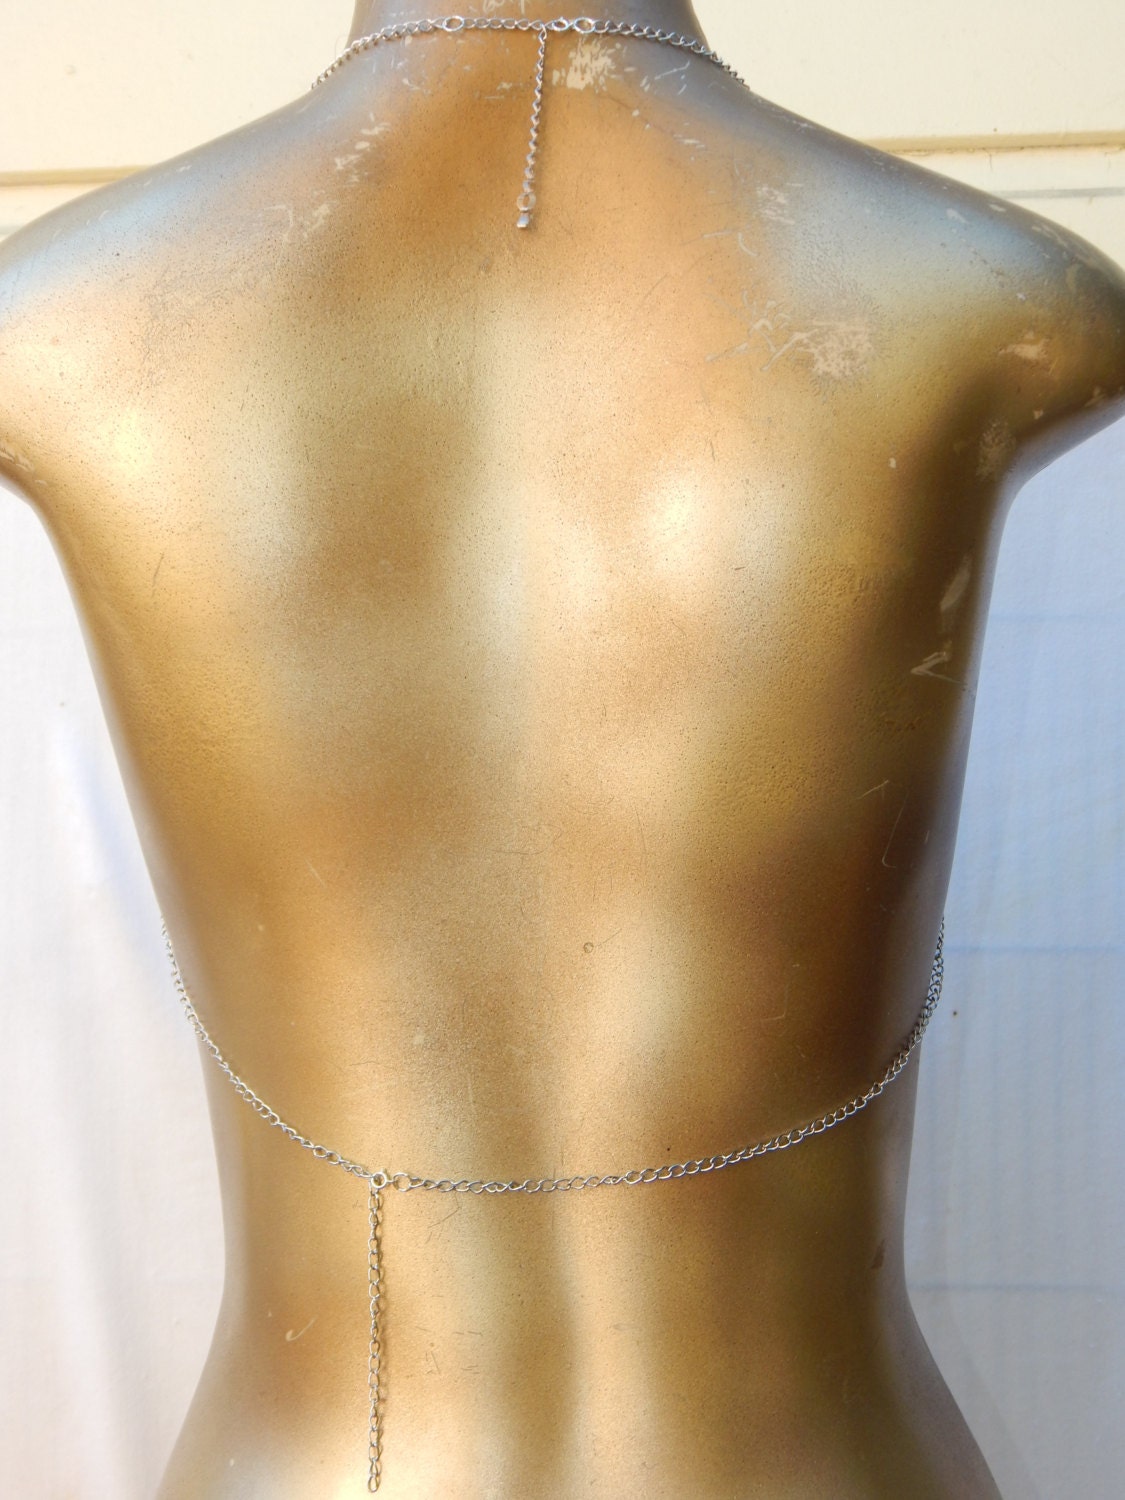 Clataly Sexy Bikini Bra Body Chain Gold Crystal Copper Bead Mesh Body Chain  Breast Chain Lingerie Necklace Accessories Nightclub Jewelry Adjustable